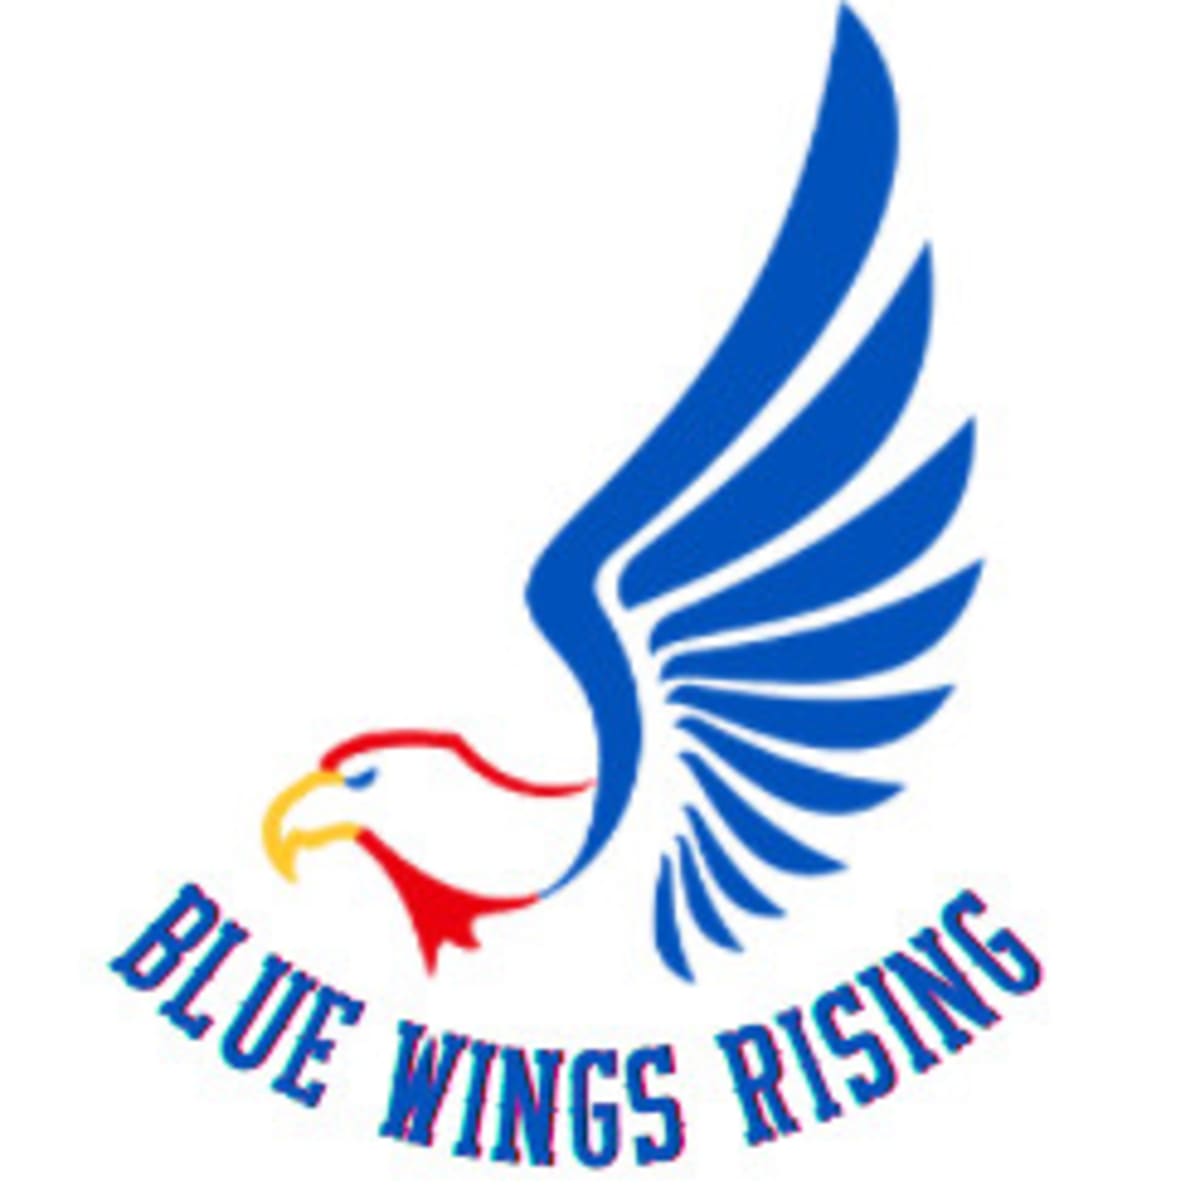 K-Uniform Report: New Basketball Threads - Blue Wings Rising